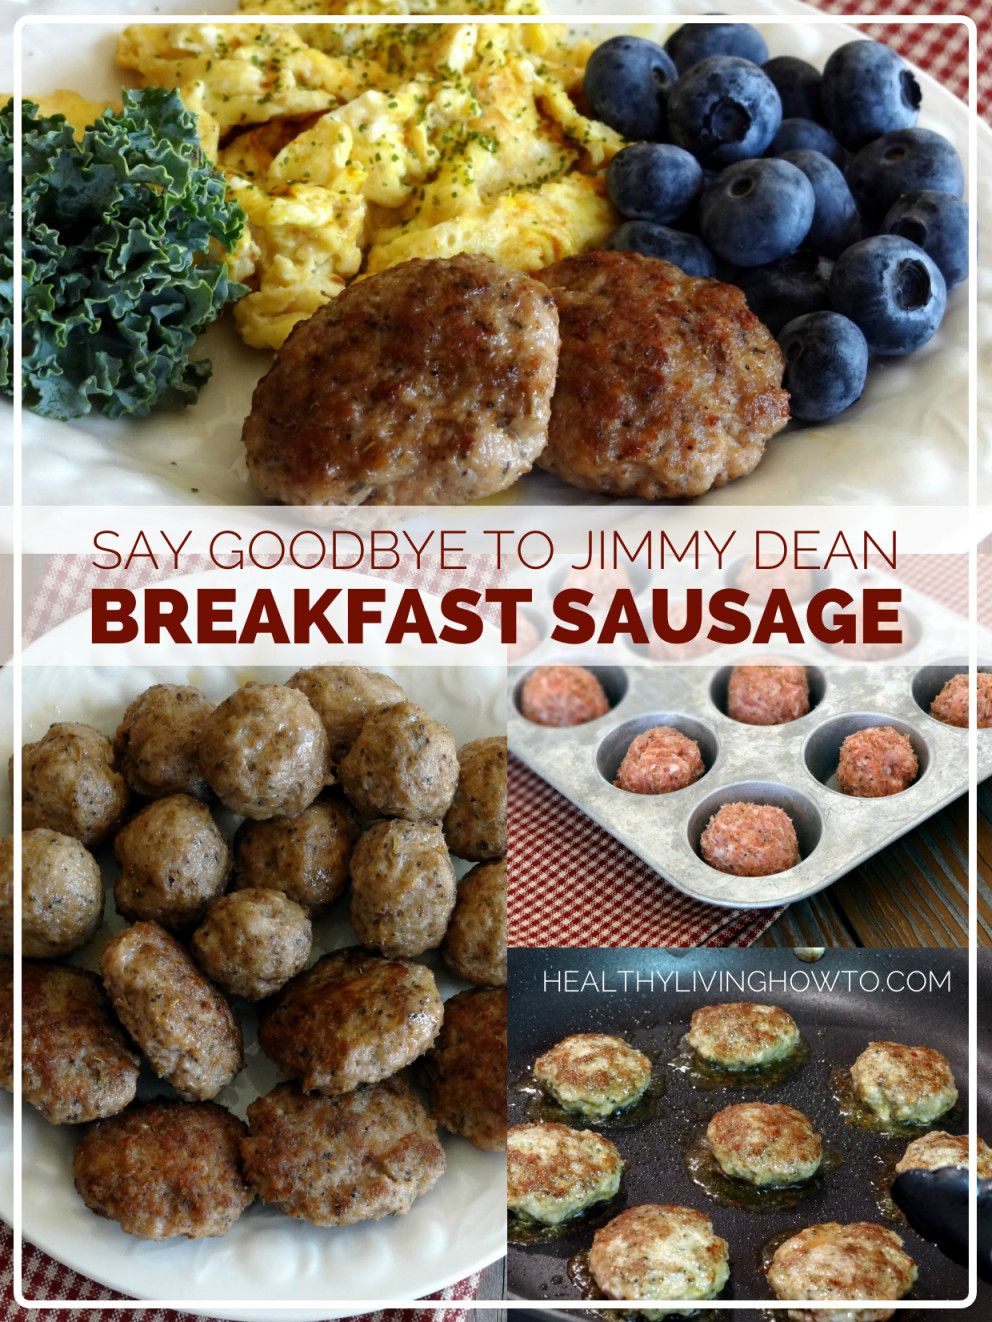 Healthy Breakfast Sausage
 Life Sources Blog